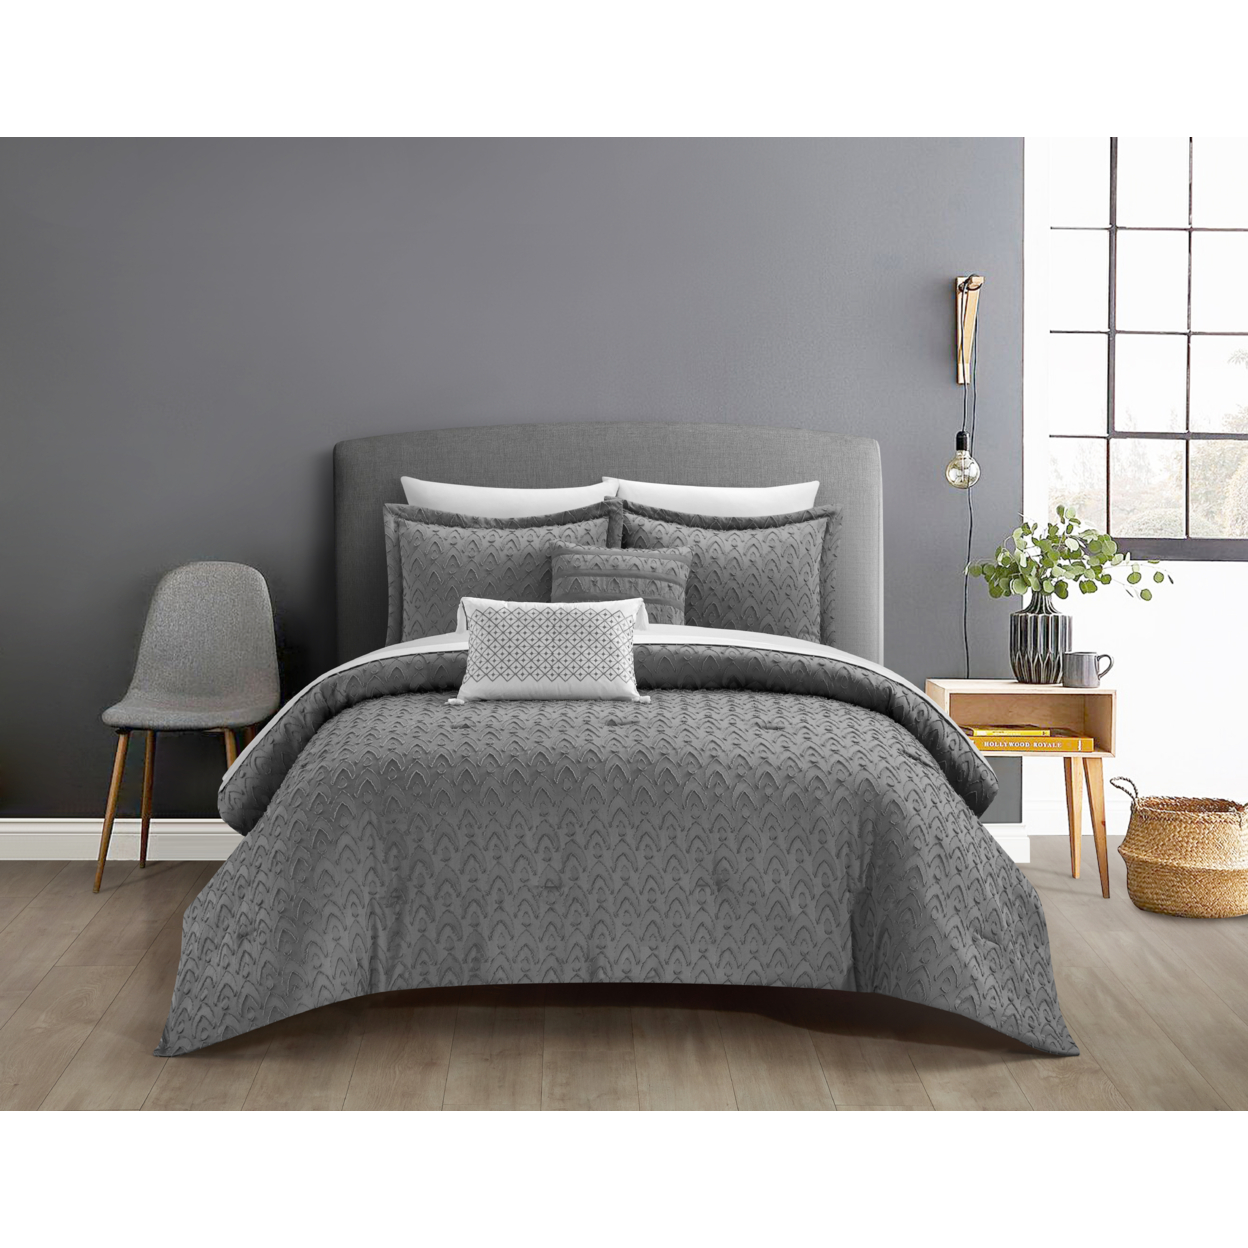 Deign 5 Piece Comforter Set Clip Jacquard Geometric Pattern Design Bedding - Grey, Queen